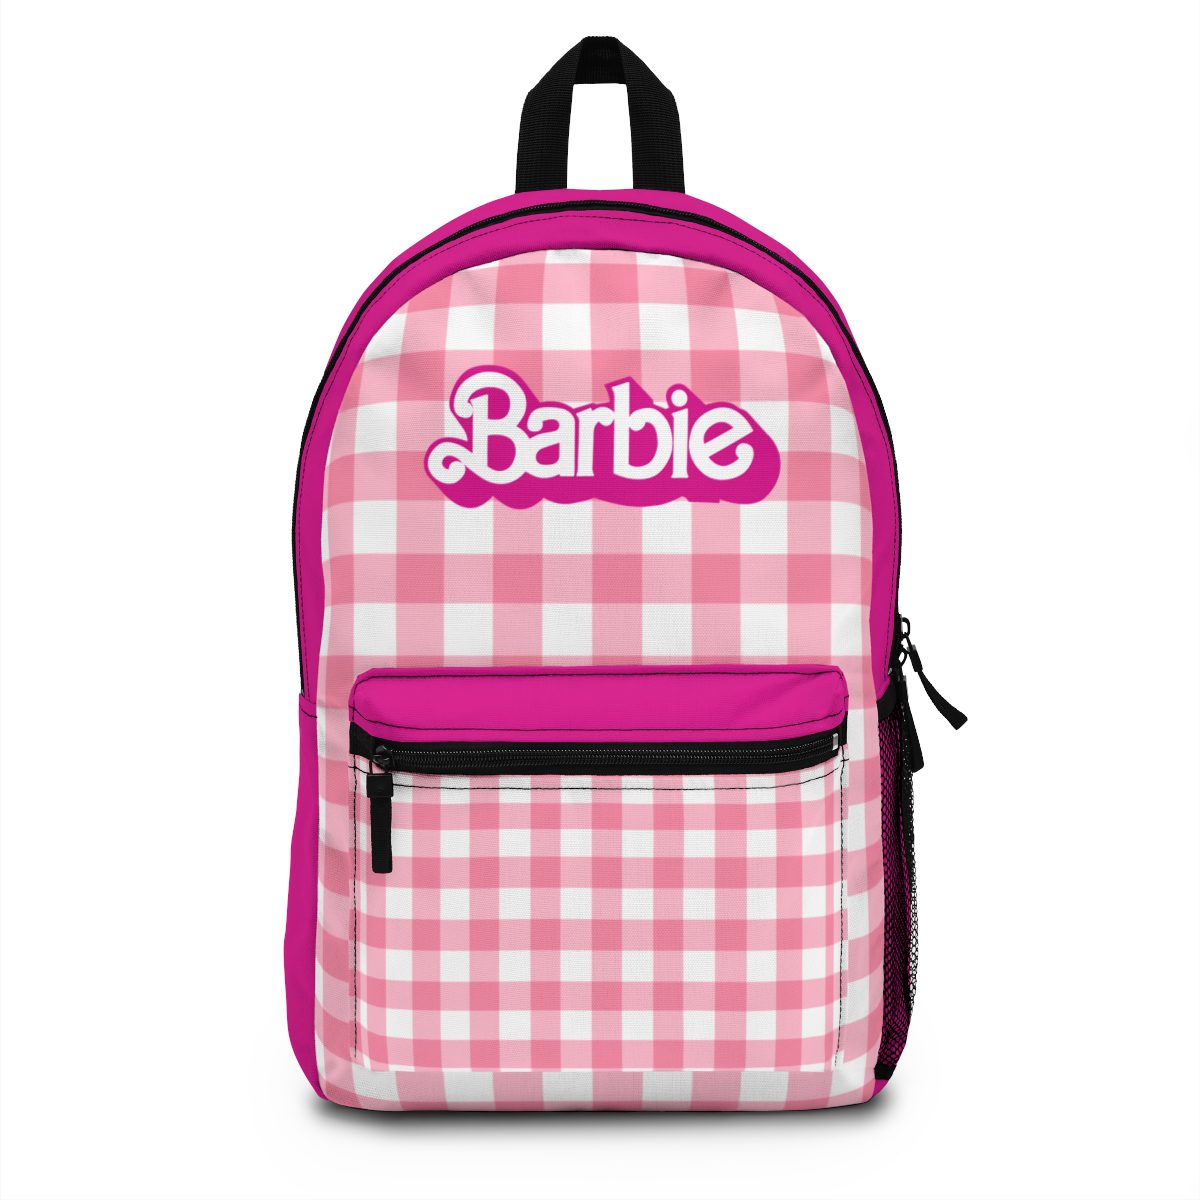 Barbie School Chic: Magenta and White Grid Kids Backpack Cool Kiddo